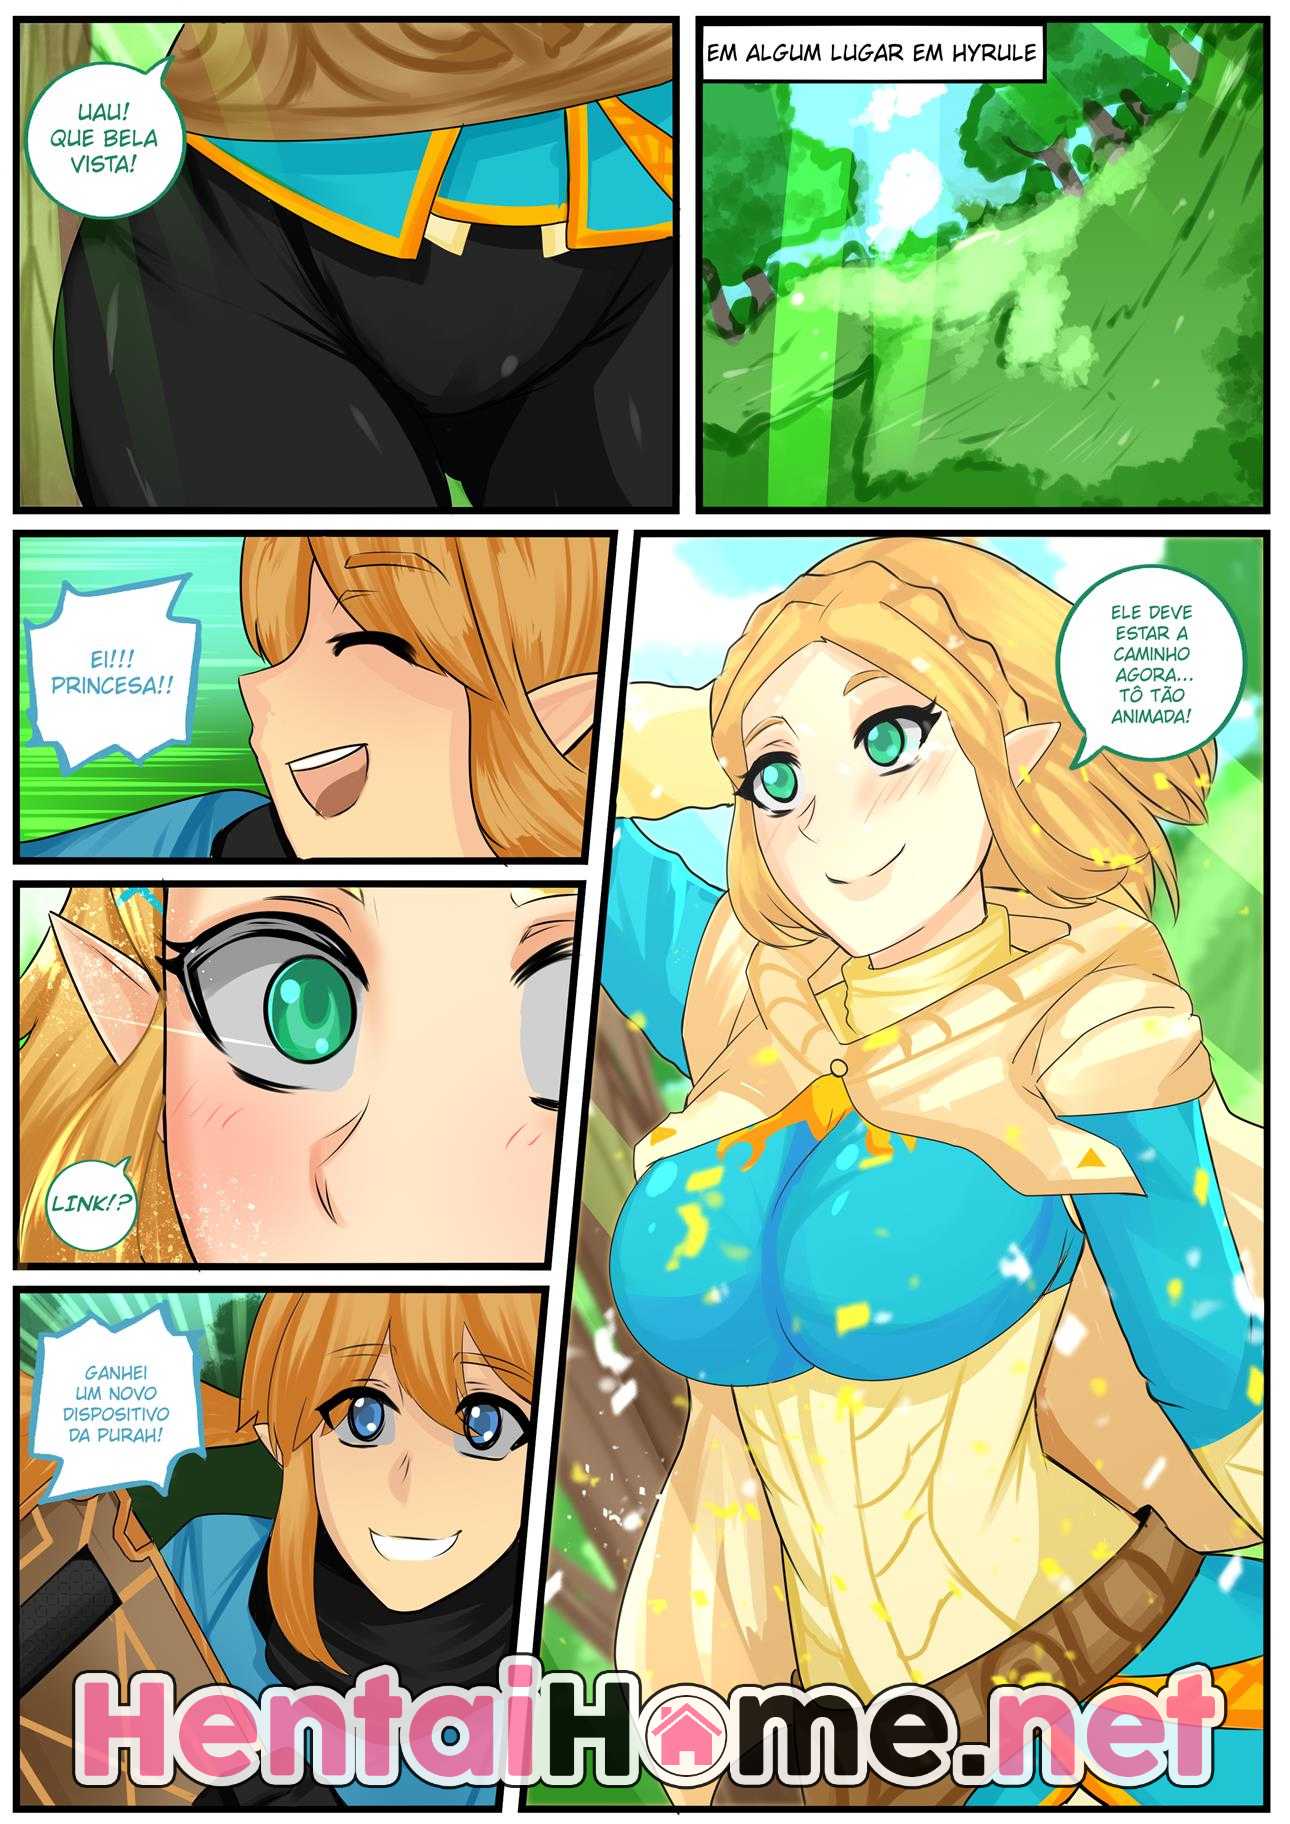 Zelda pornô fodendo - Foto 2